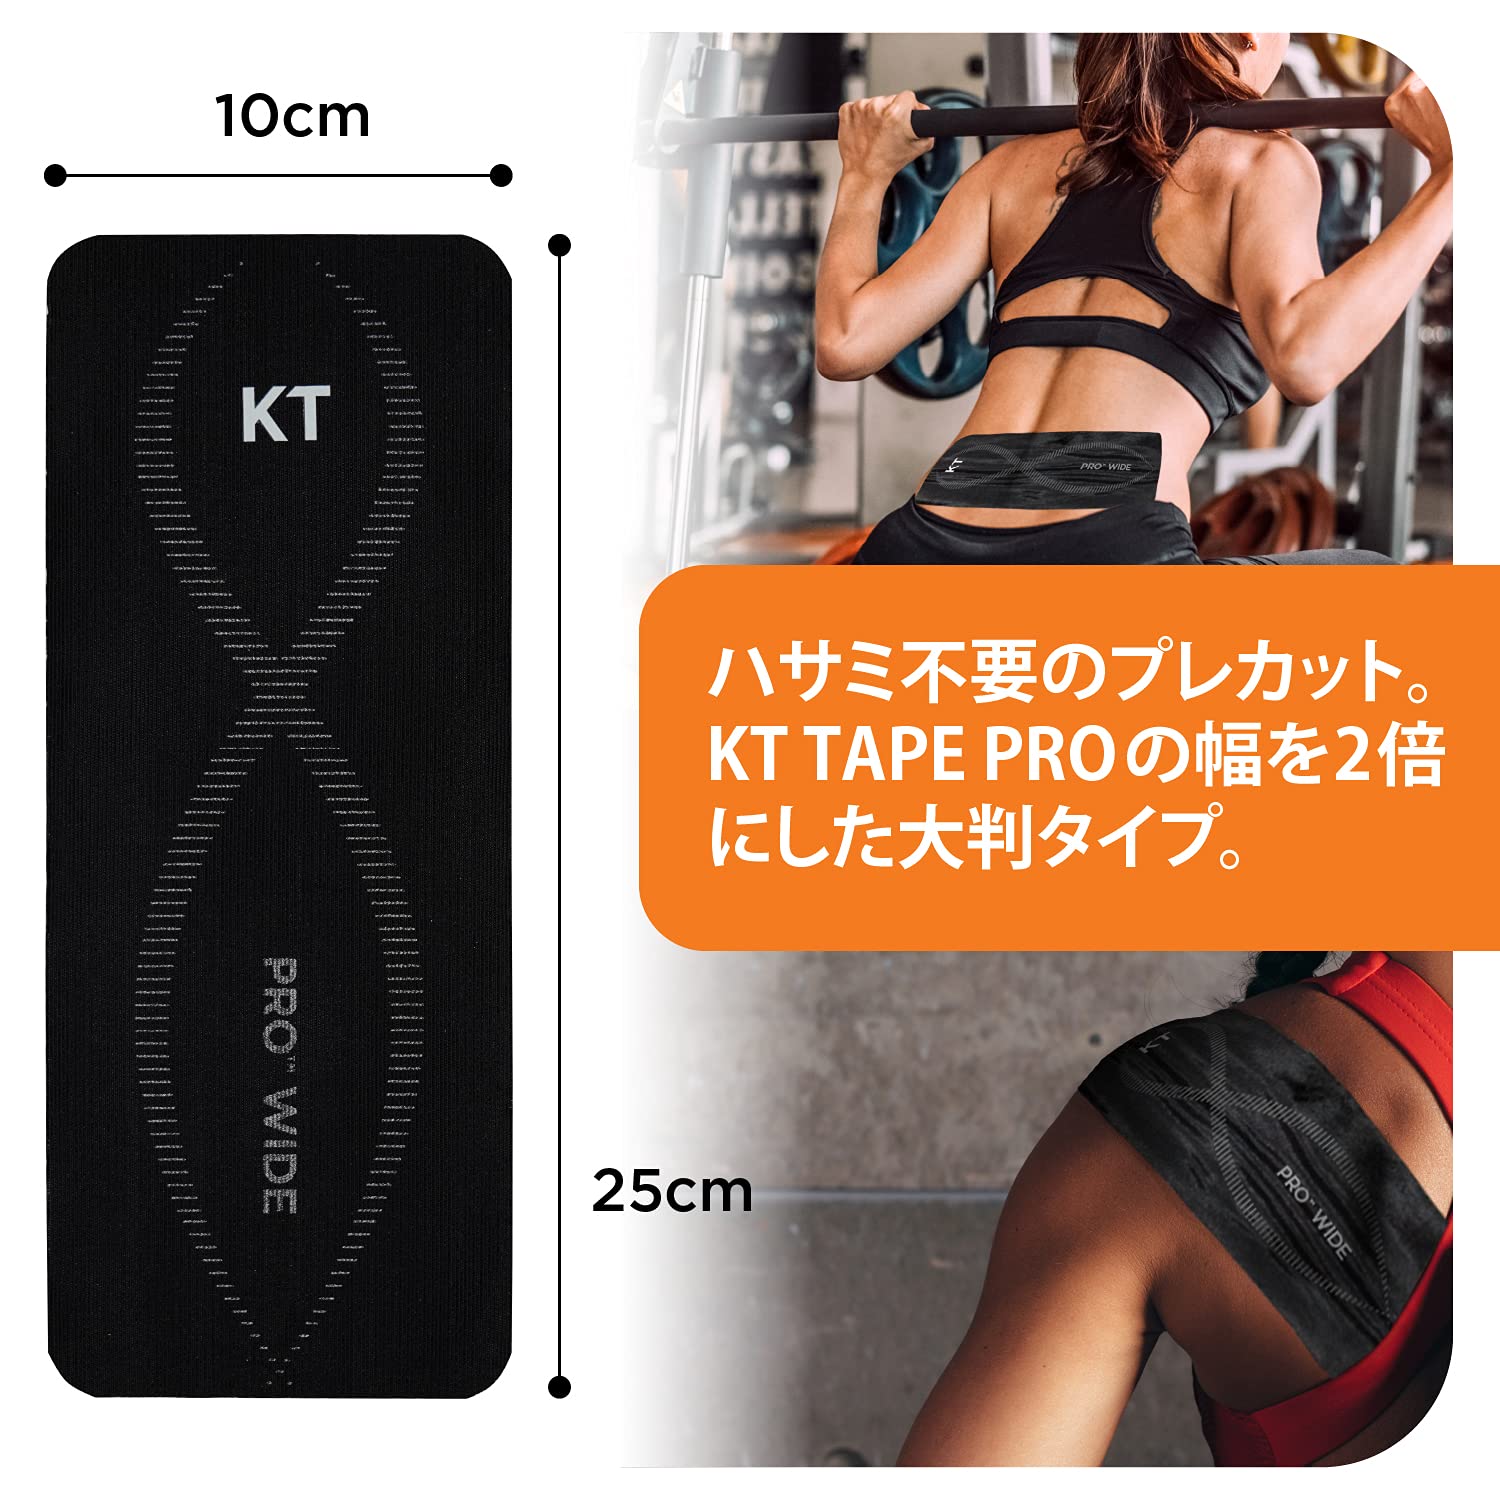 Li-Ning KT Tape Pro Wide Supporter 10 Strips - Jet Black - Best Price online Prokicksports.com